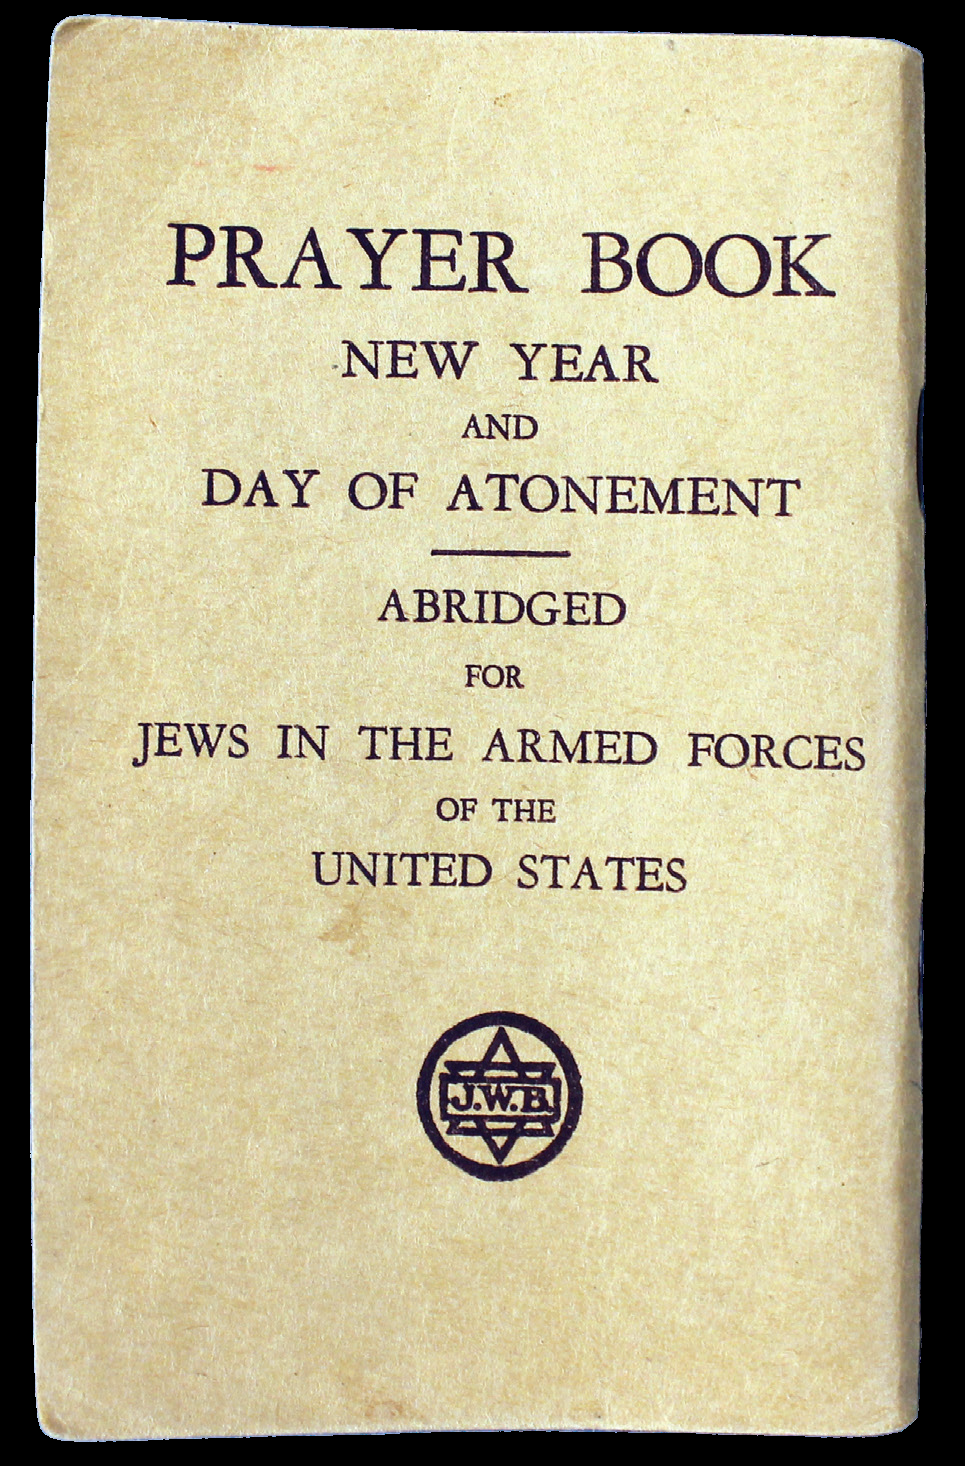 elly kleinman prayer book Day of Atonement new year Jewish Guide